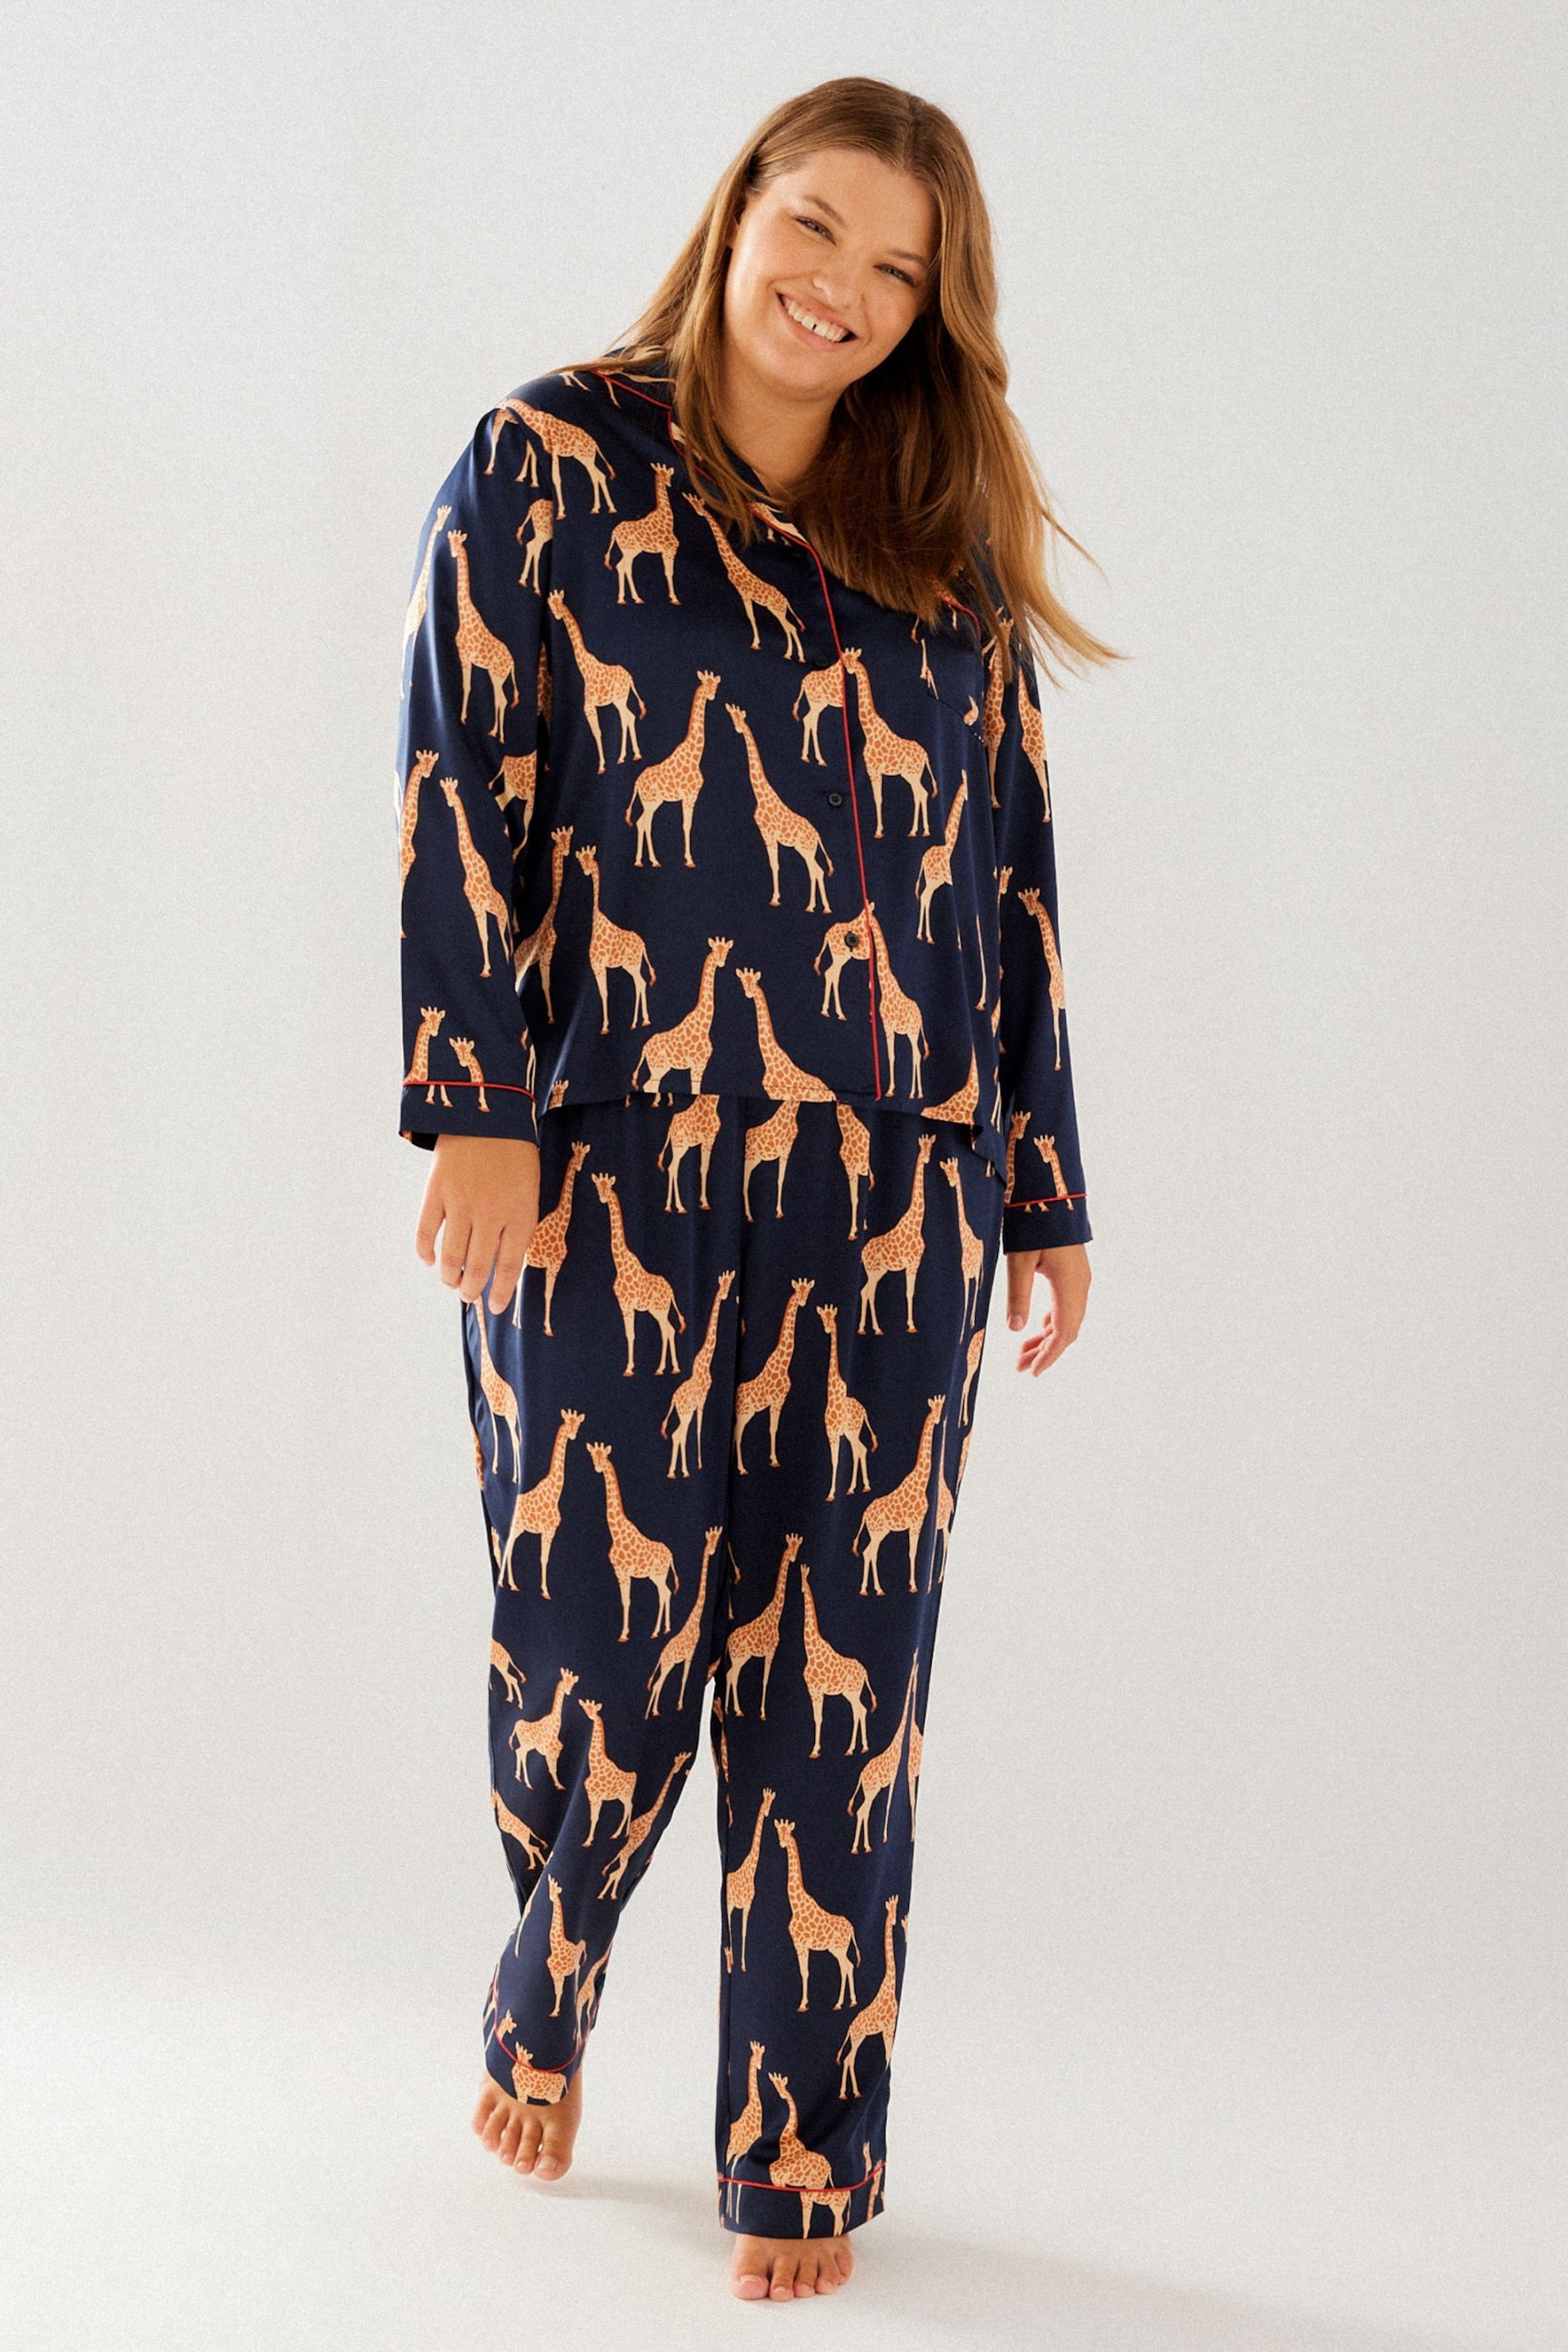 Chelsea Peers Blue Curve Satin Button Up Long Pyjamas Set - Image 5 of 5